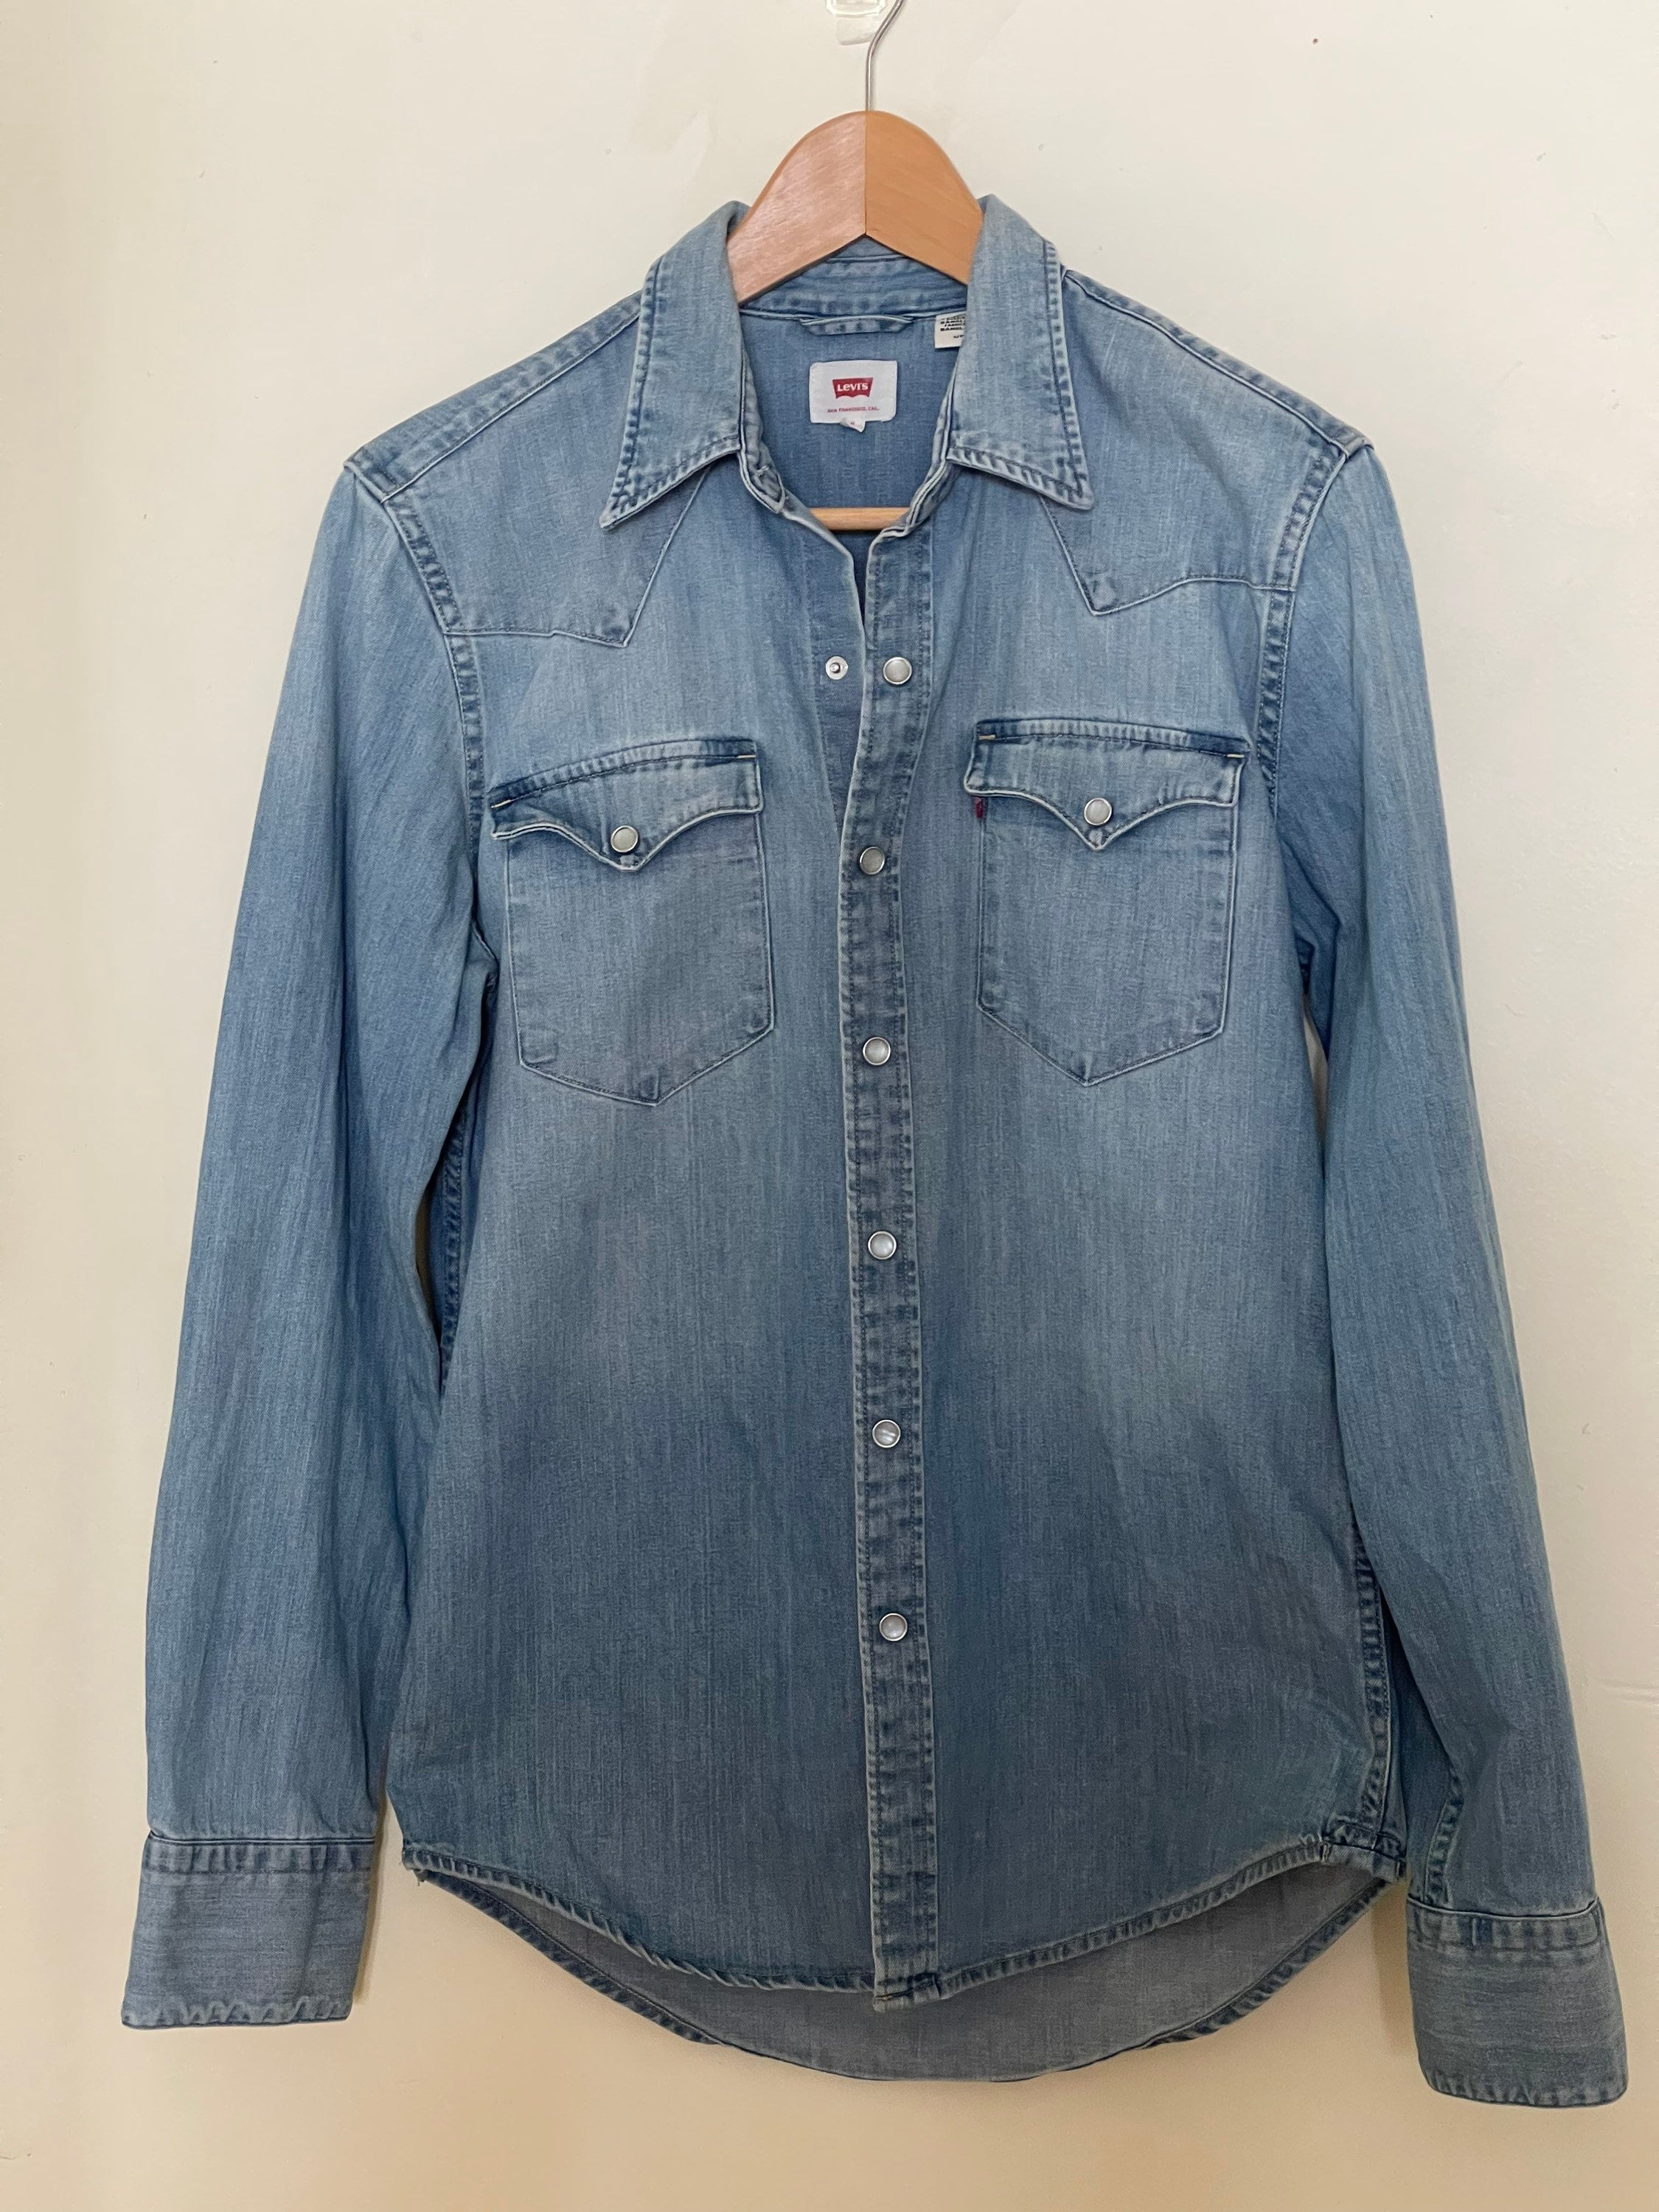 ShopExile Wrangler Denim Shirt Y2K Pearl Snap Blue Jean Button Up Top Long Sleeve Plain Basic Western Streetwear Boyfriend Vintage 00S Mens Medium 15